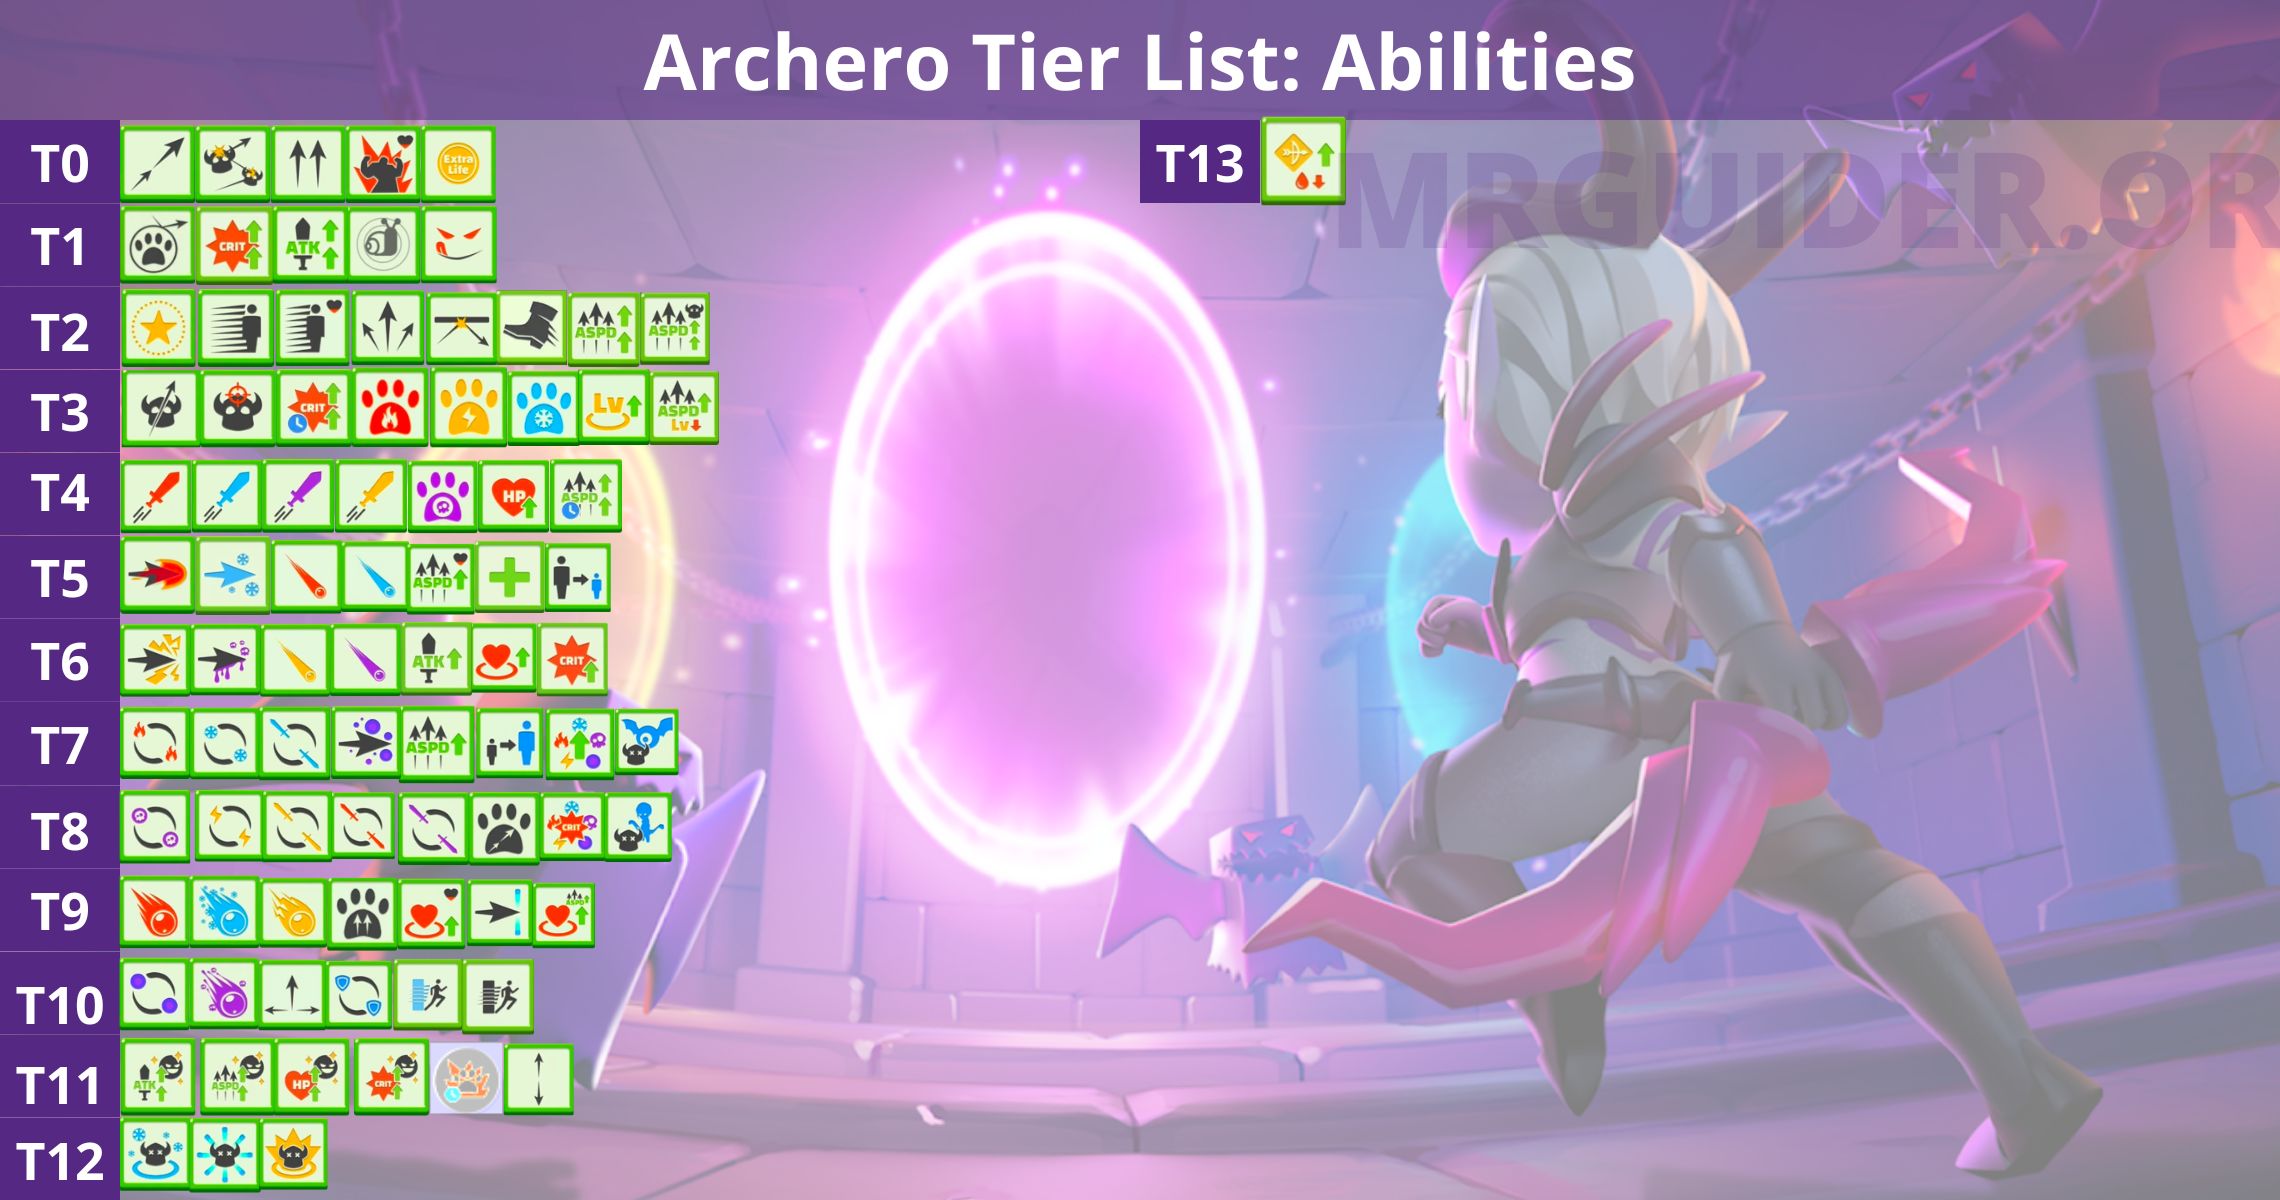 Archero Tier List Abilities